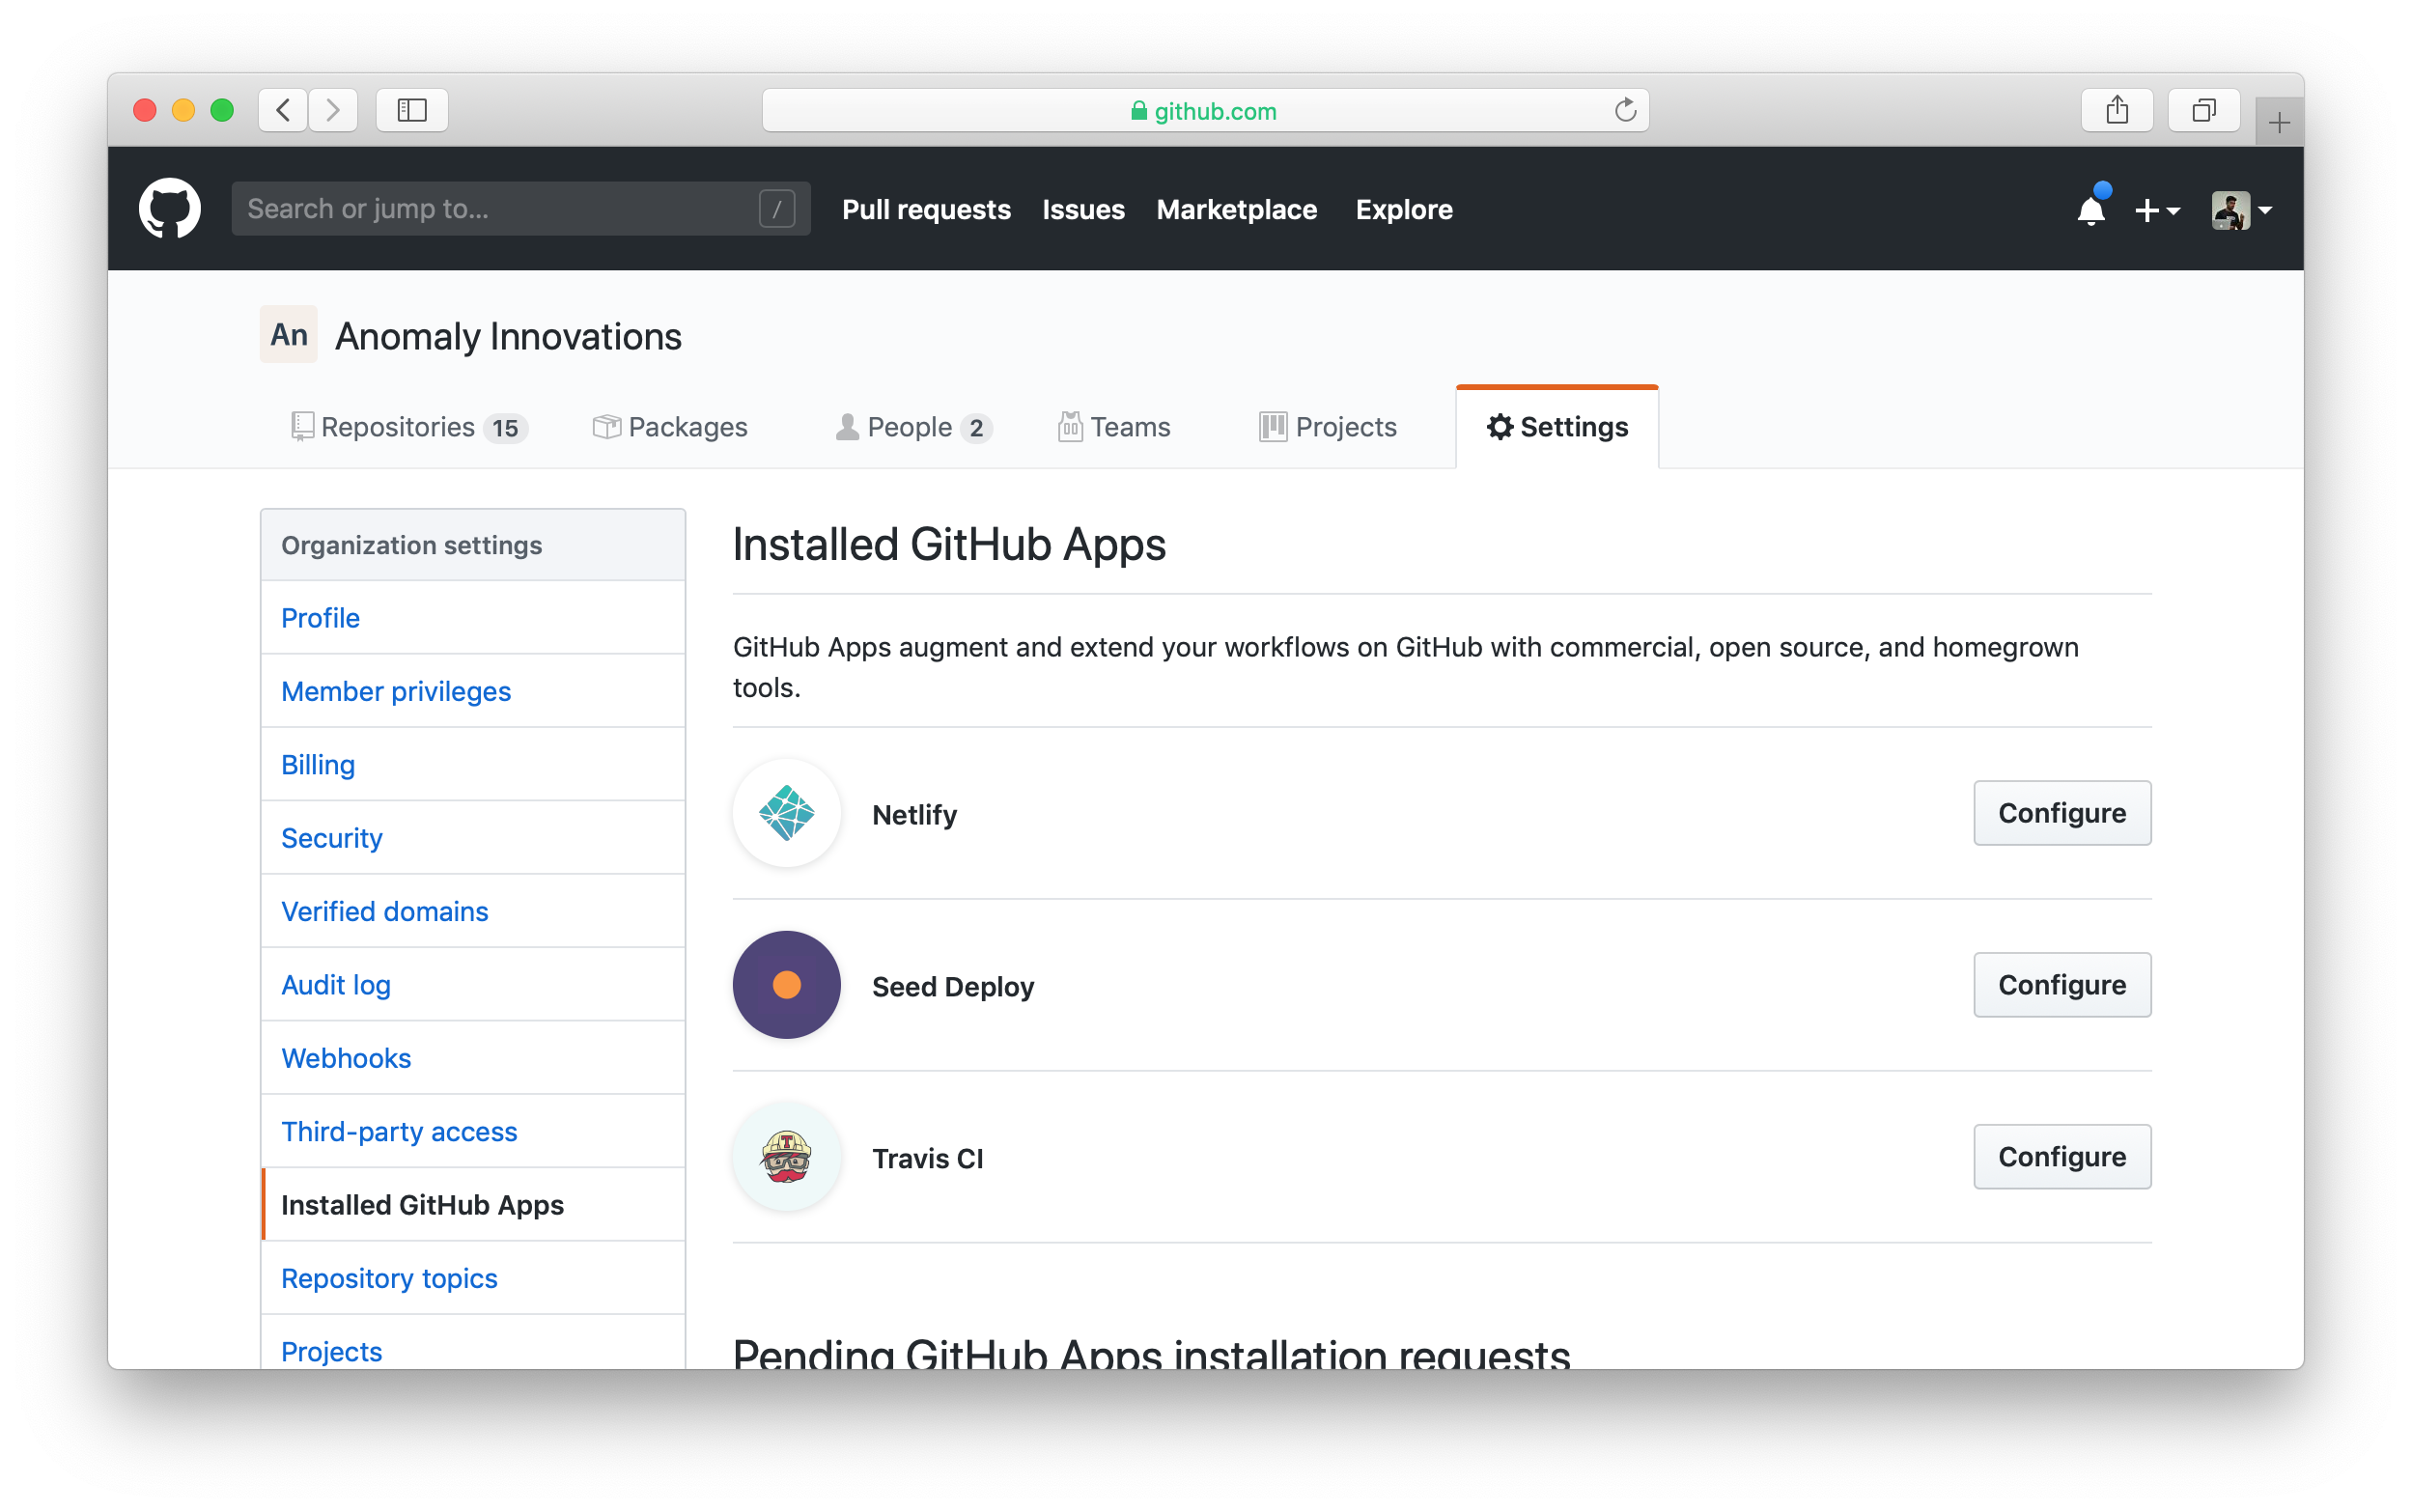 Installed GitHub apps in GitHub organization